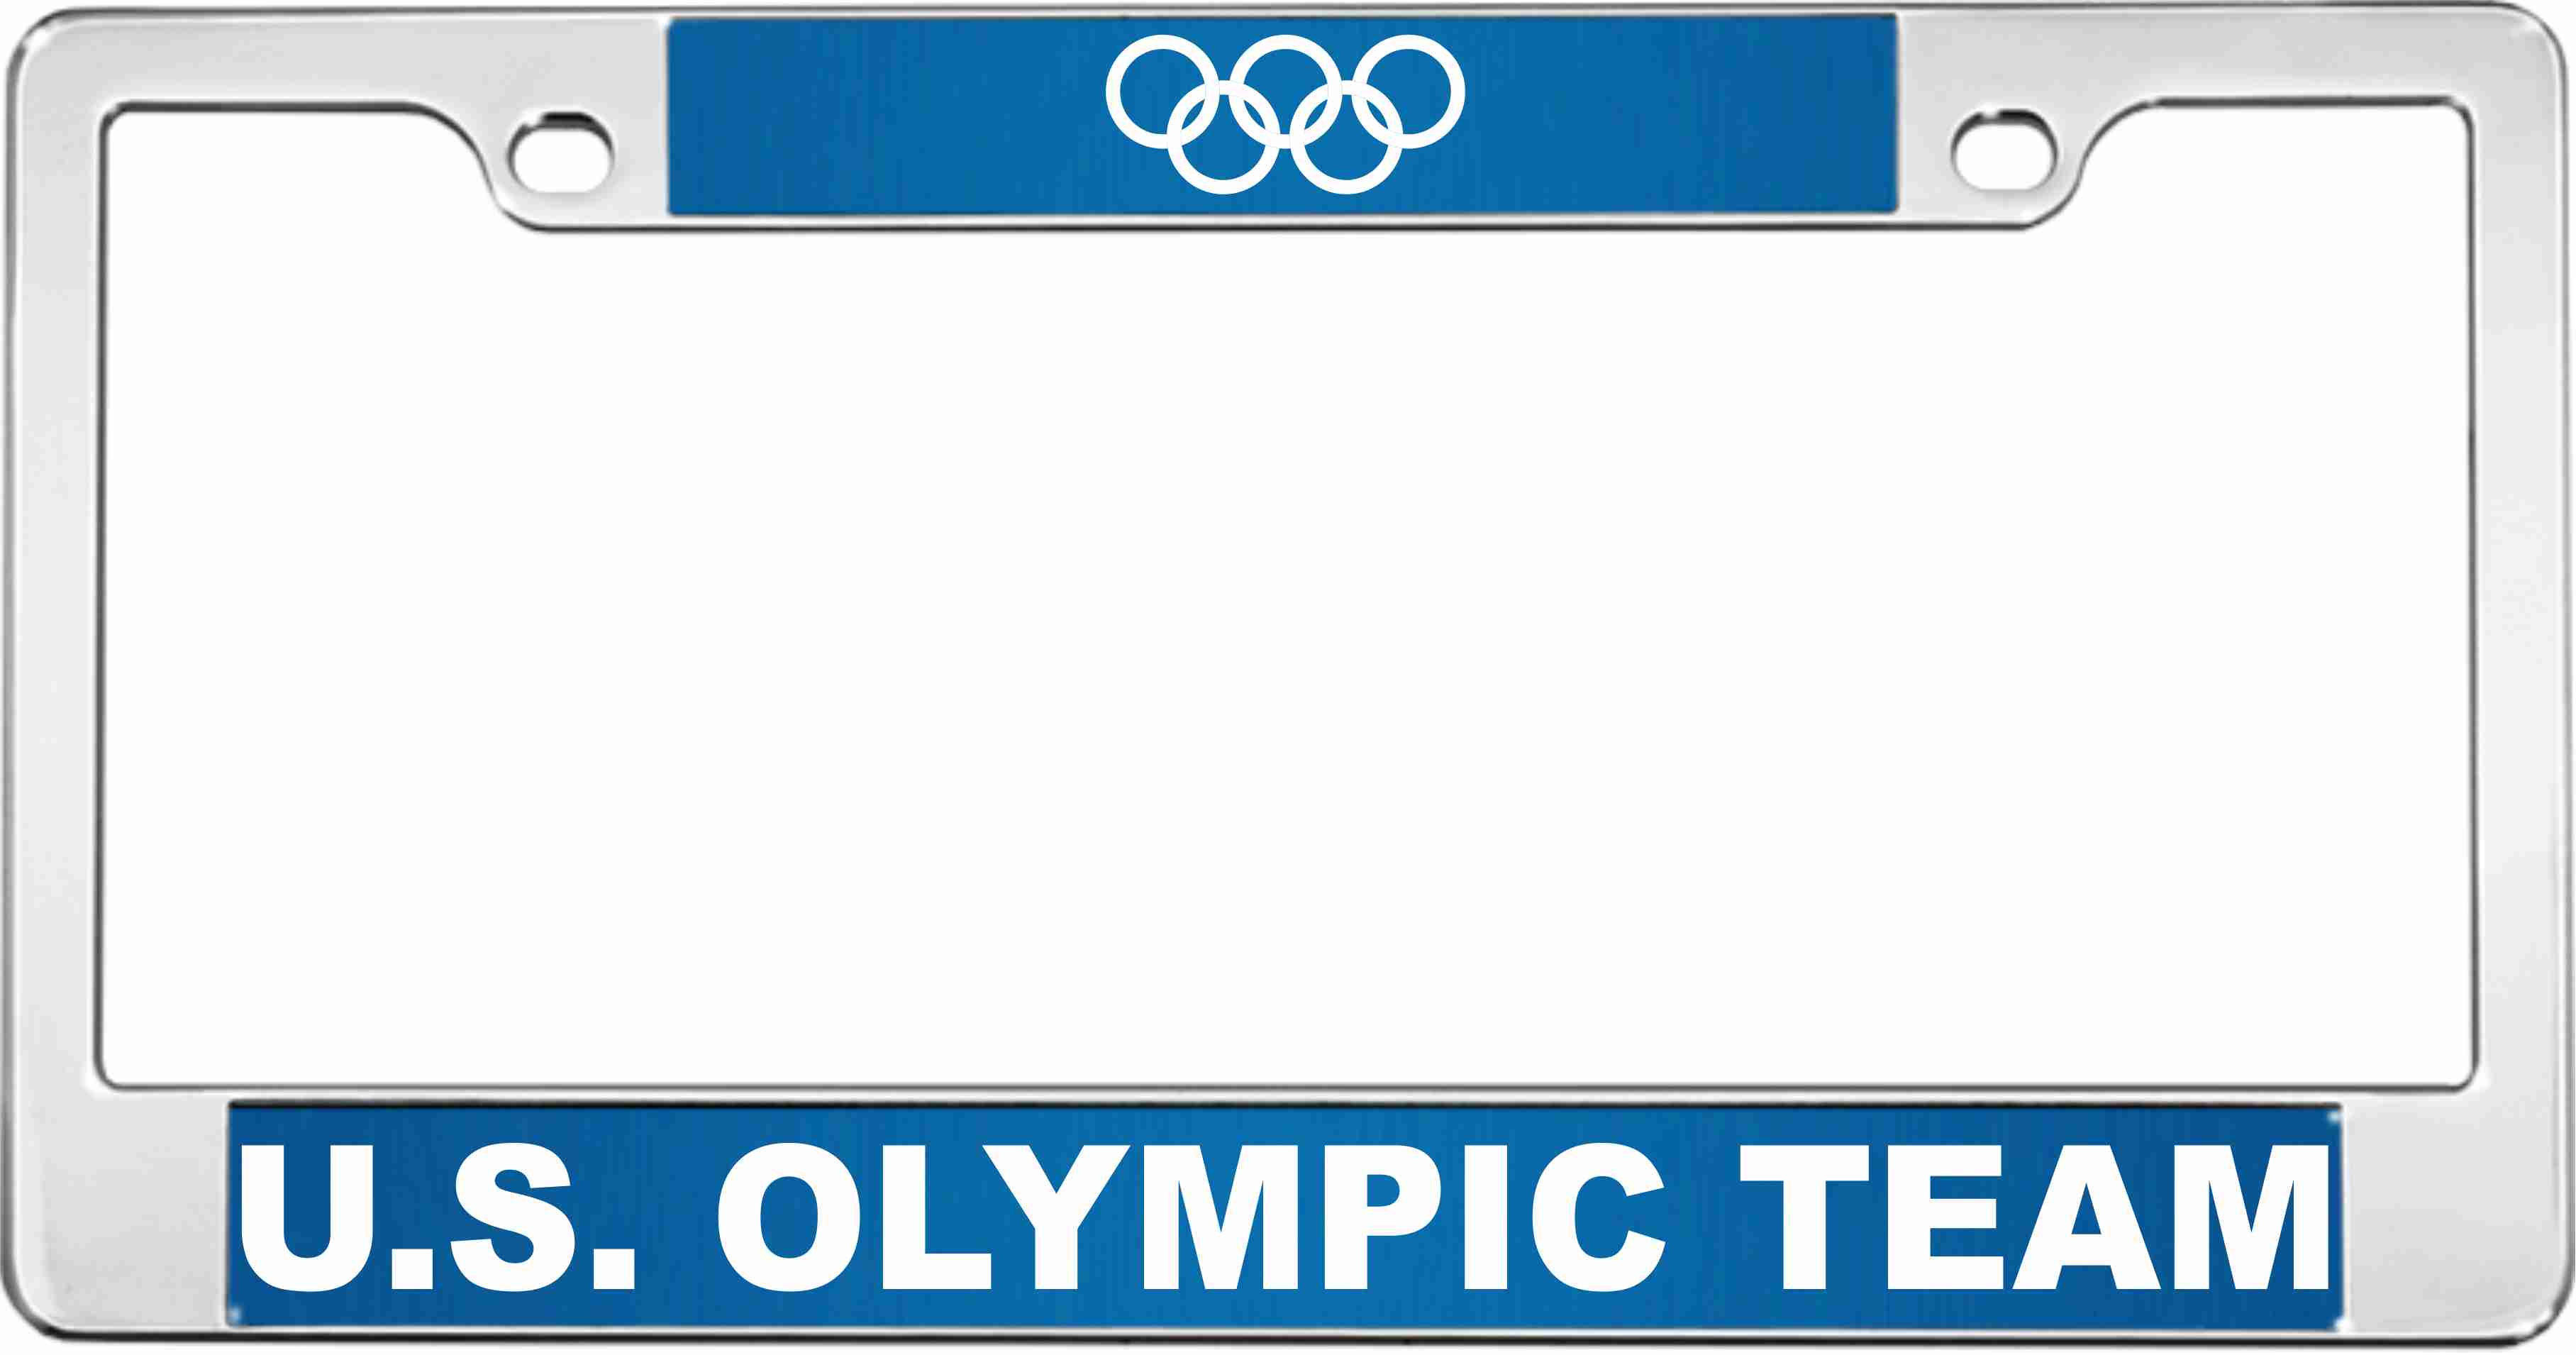 US OLYMPIC TEAM - custom metal license plate frame (flat shape)